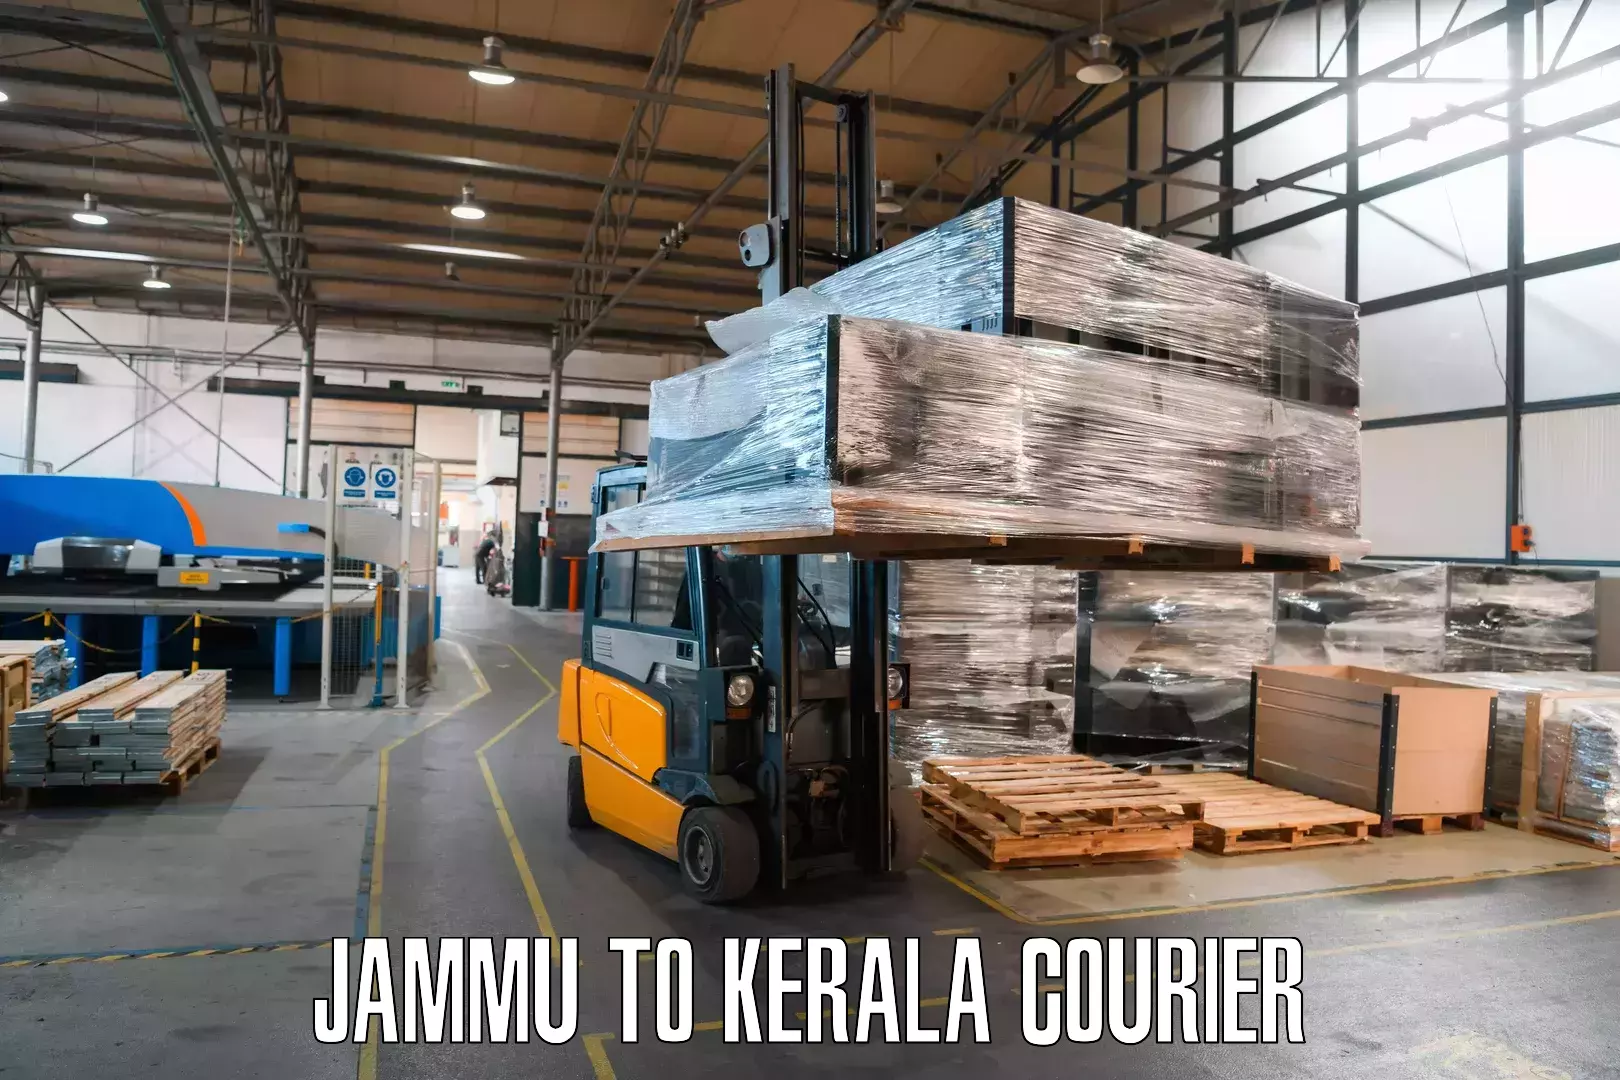 Express mail solutions Jammu to Kattappana